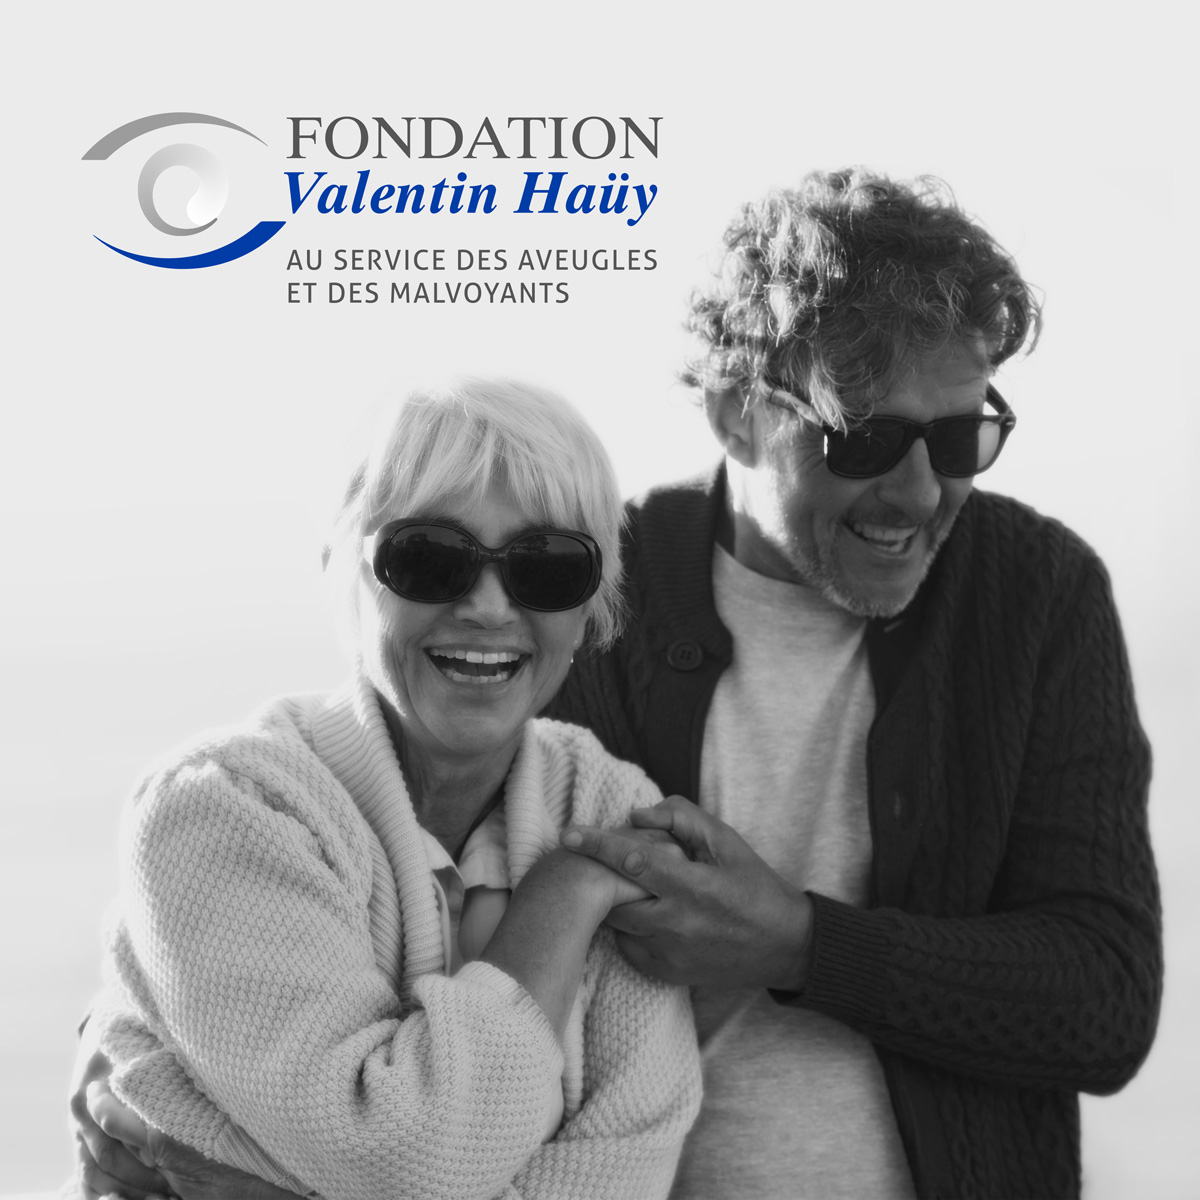 Fondation Valentin Haüy